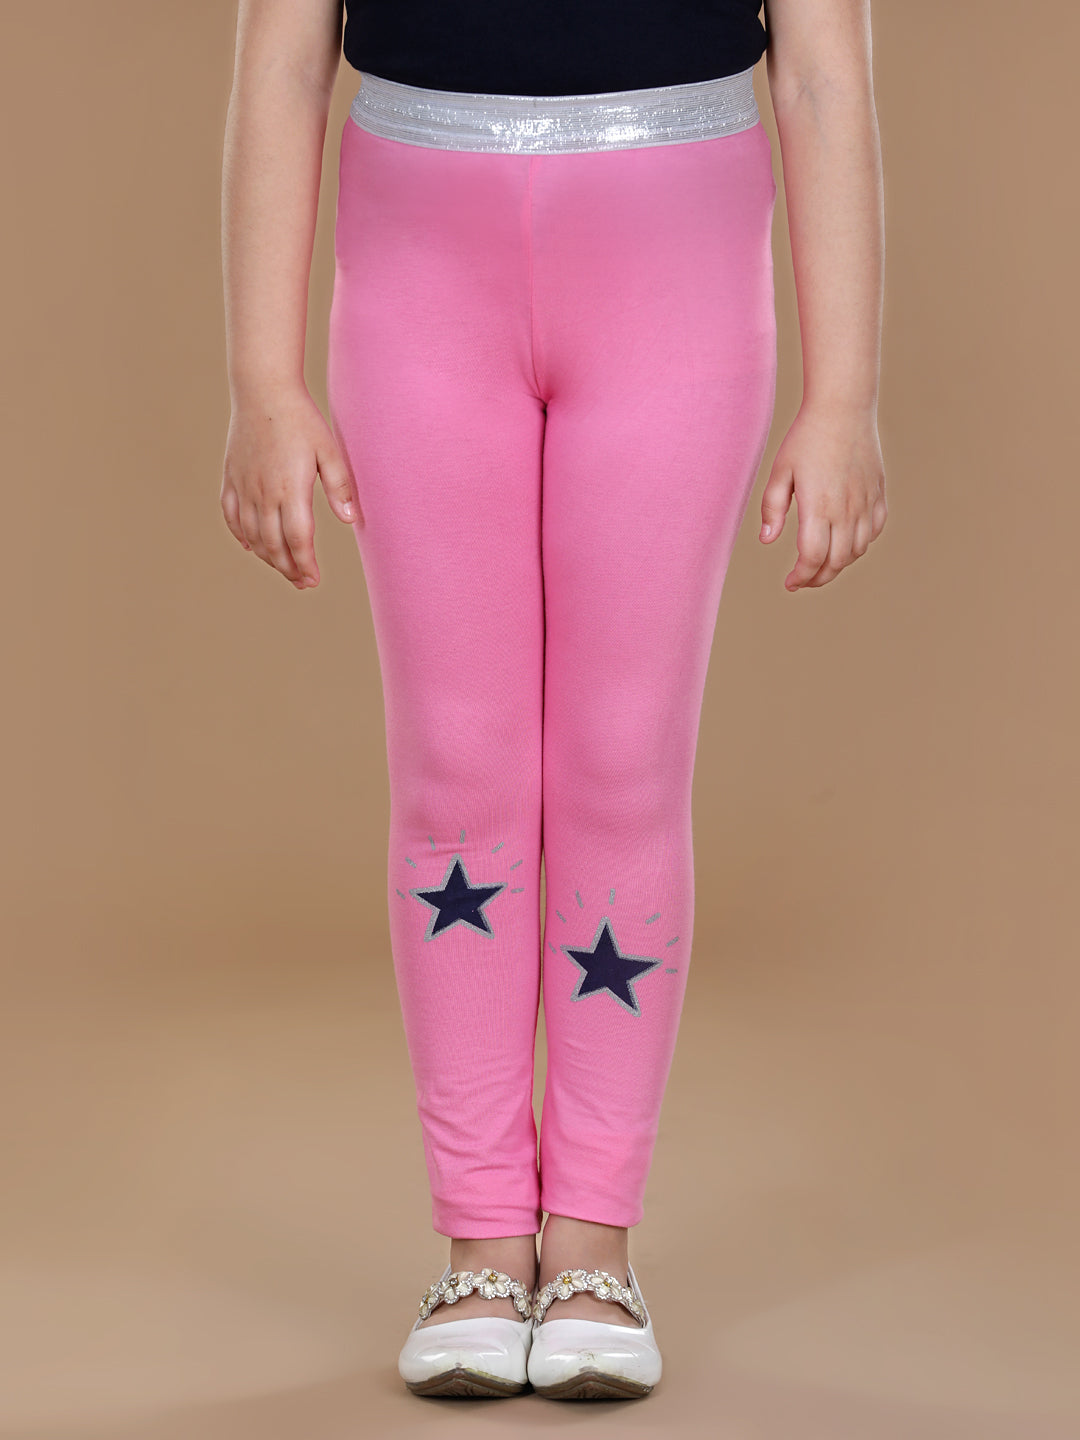 Girls Silver Elasticated Waistband & Star Printed Pink Leggings